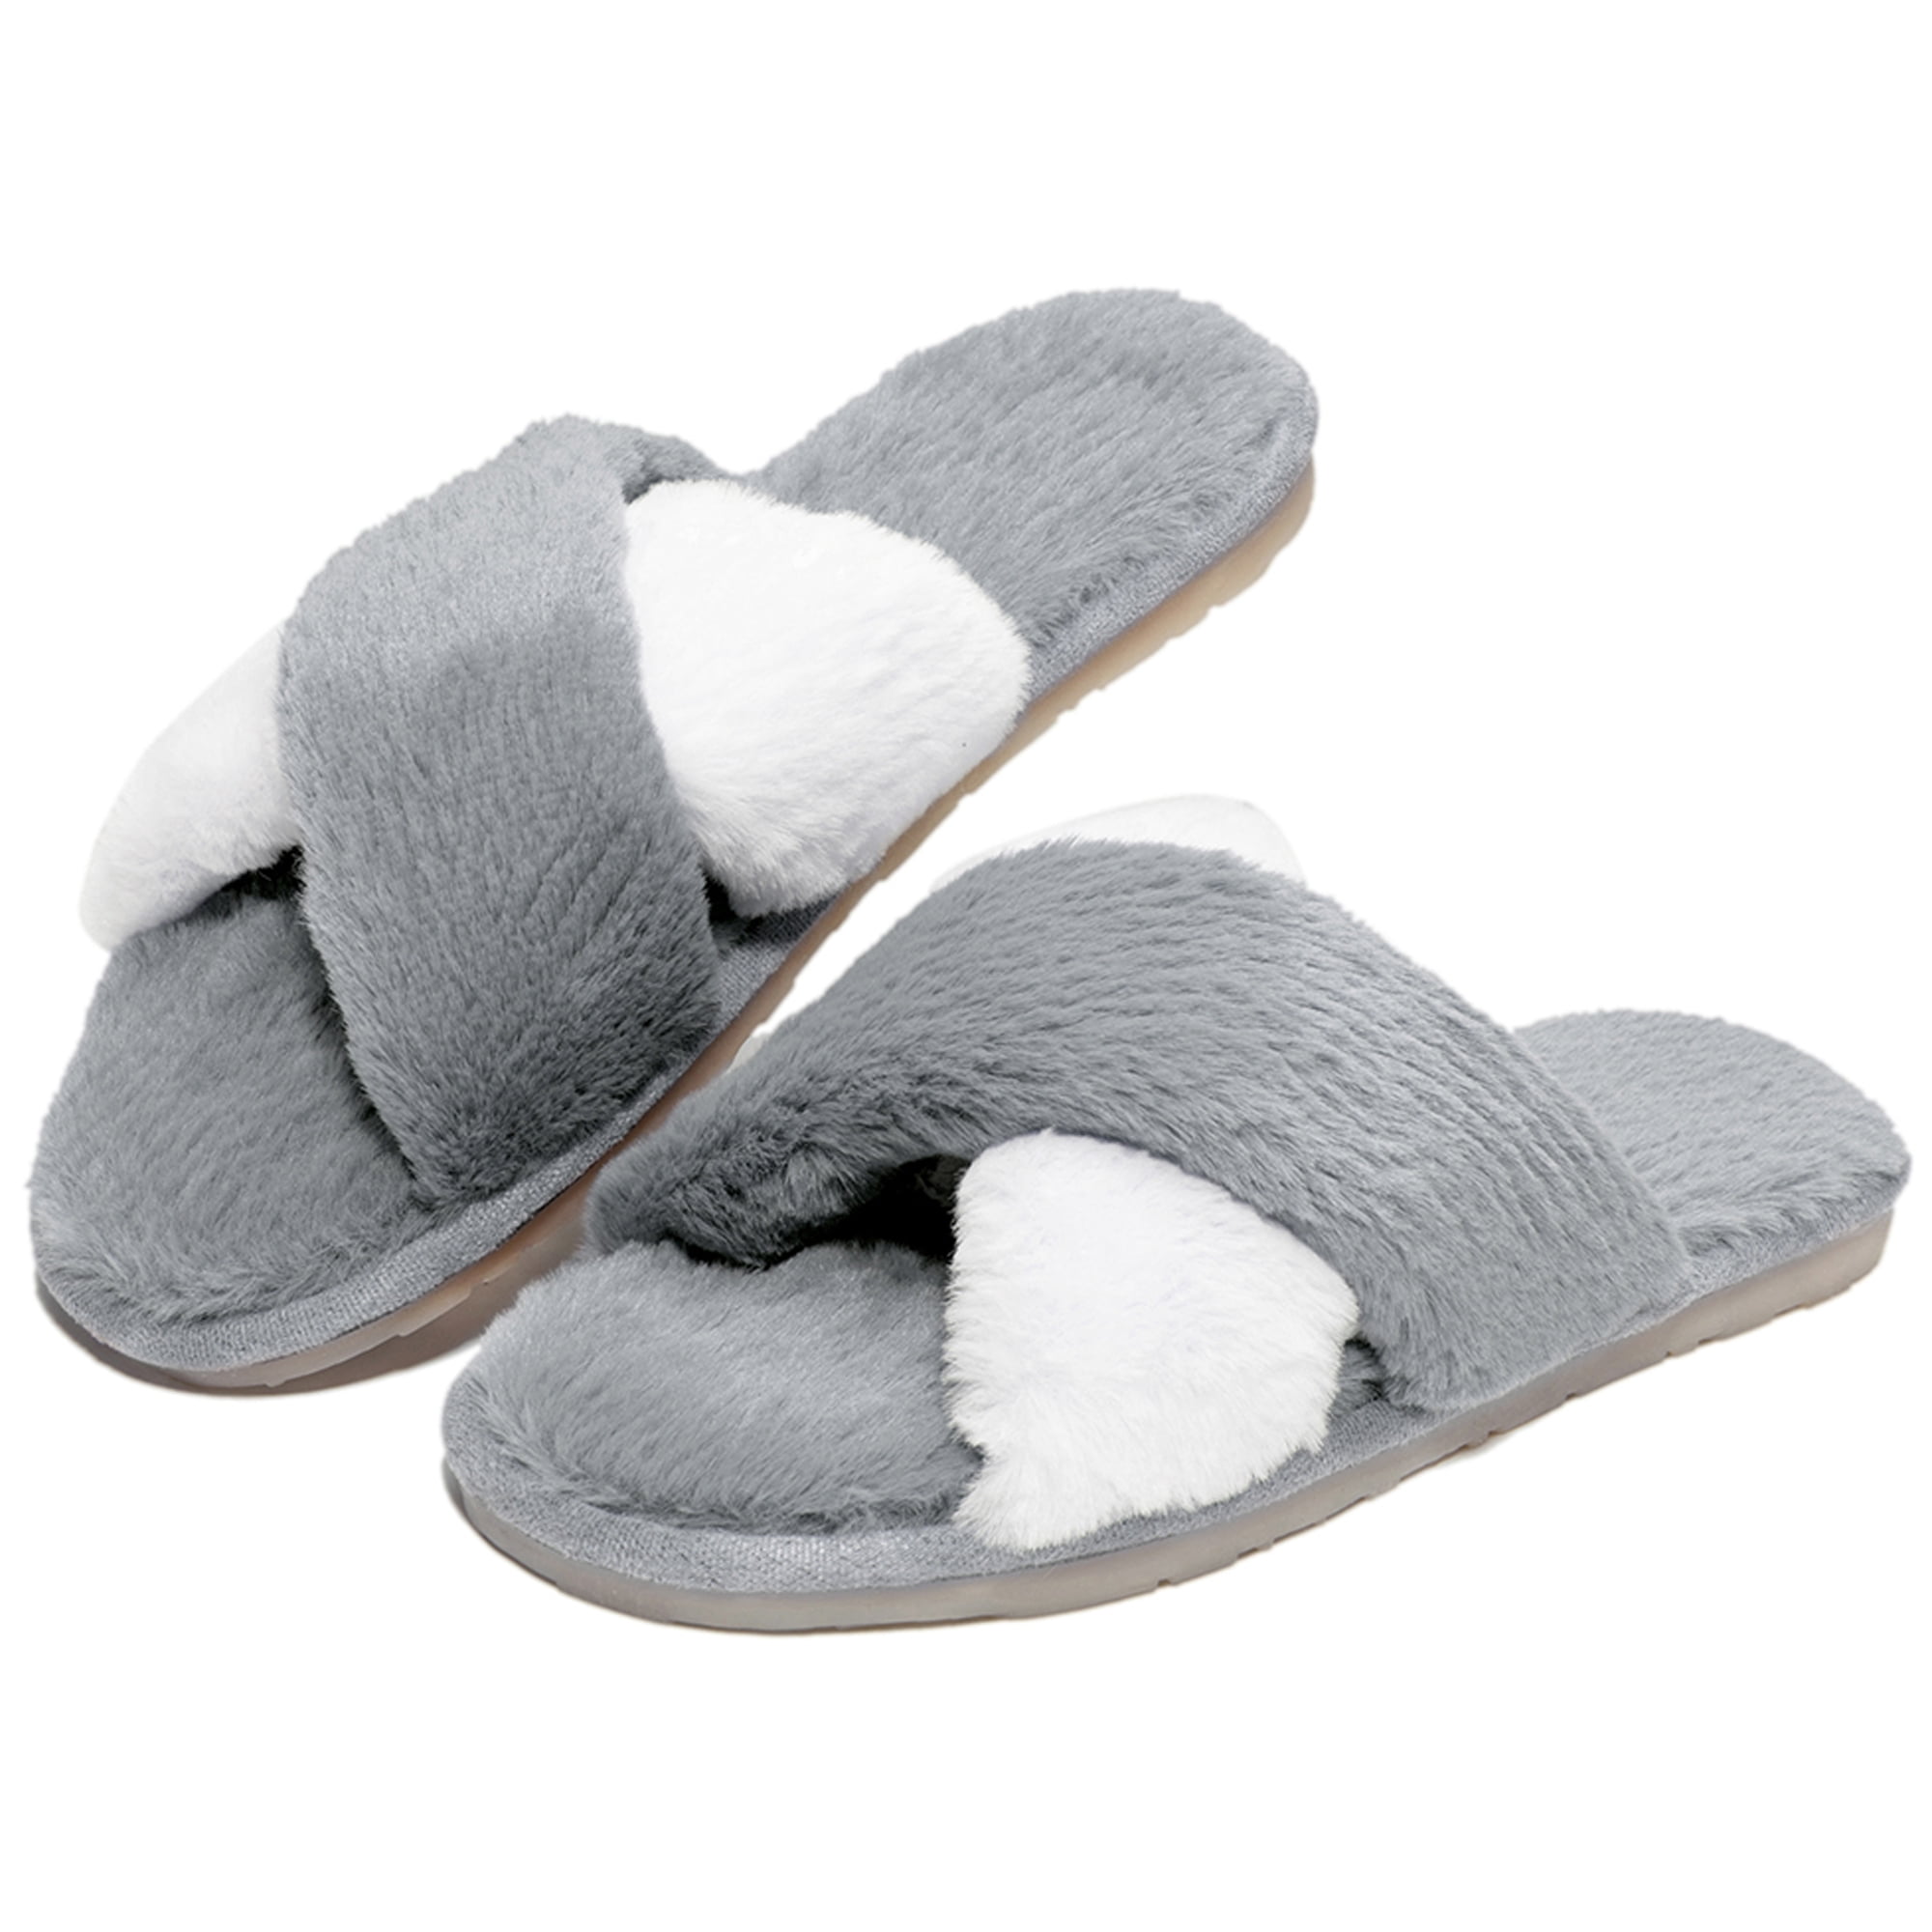 Men Winter Warm Cotton Anti-Slip Slippers Flat Home Sandals Indoor Shoes Comfy